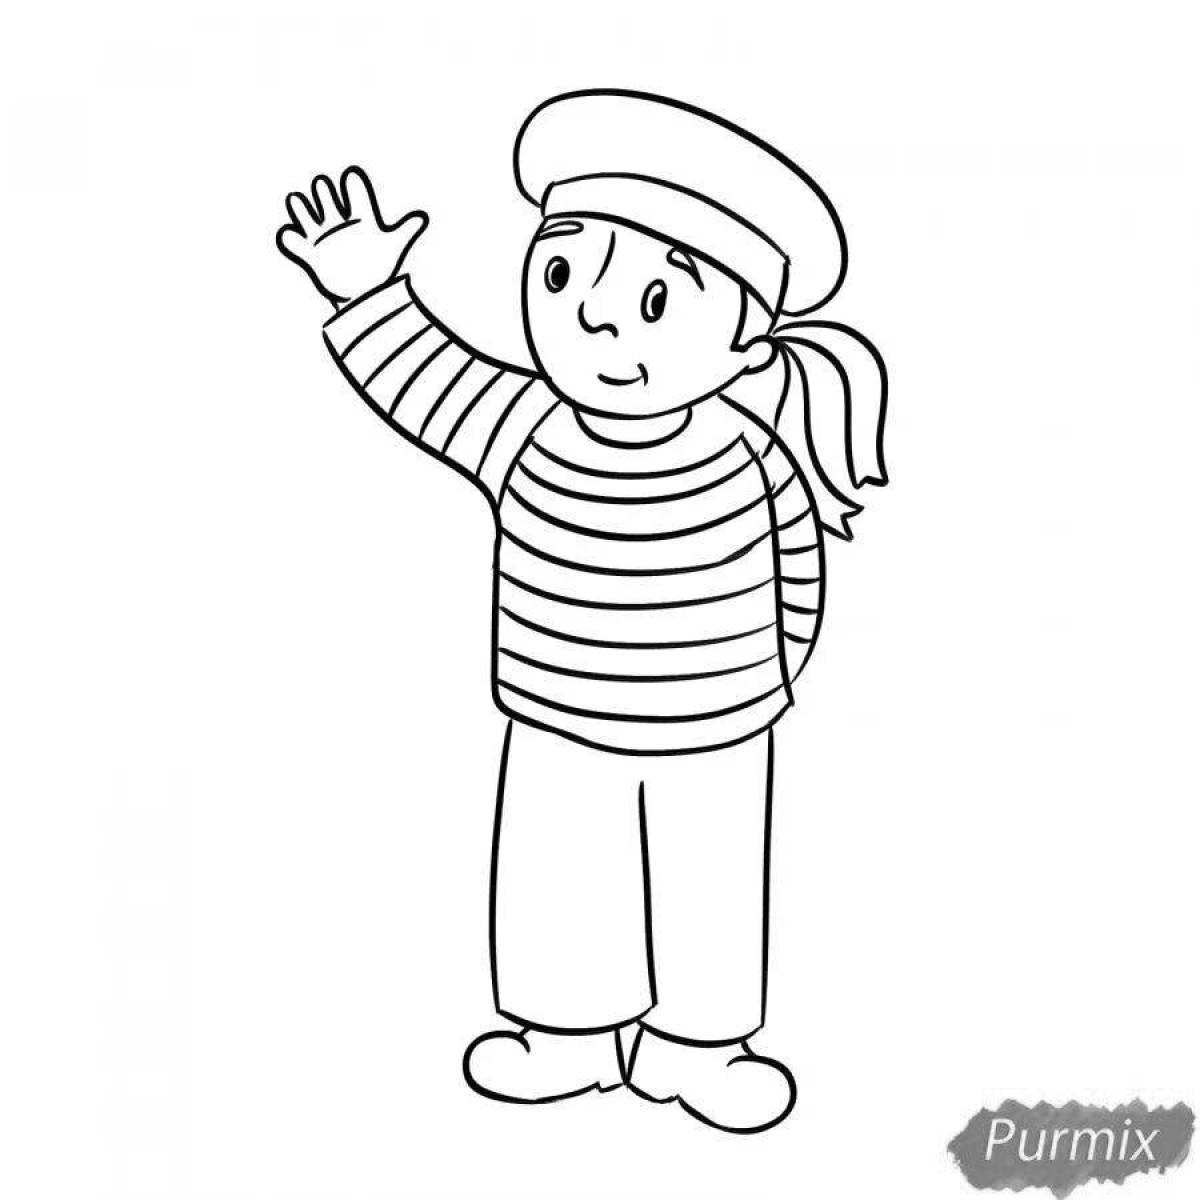 Coloring-coloring-sailor-imagination for children